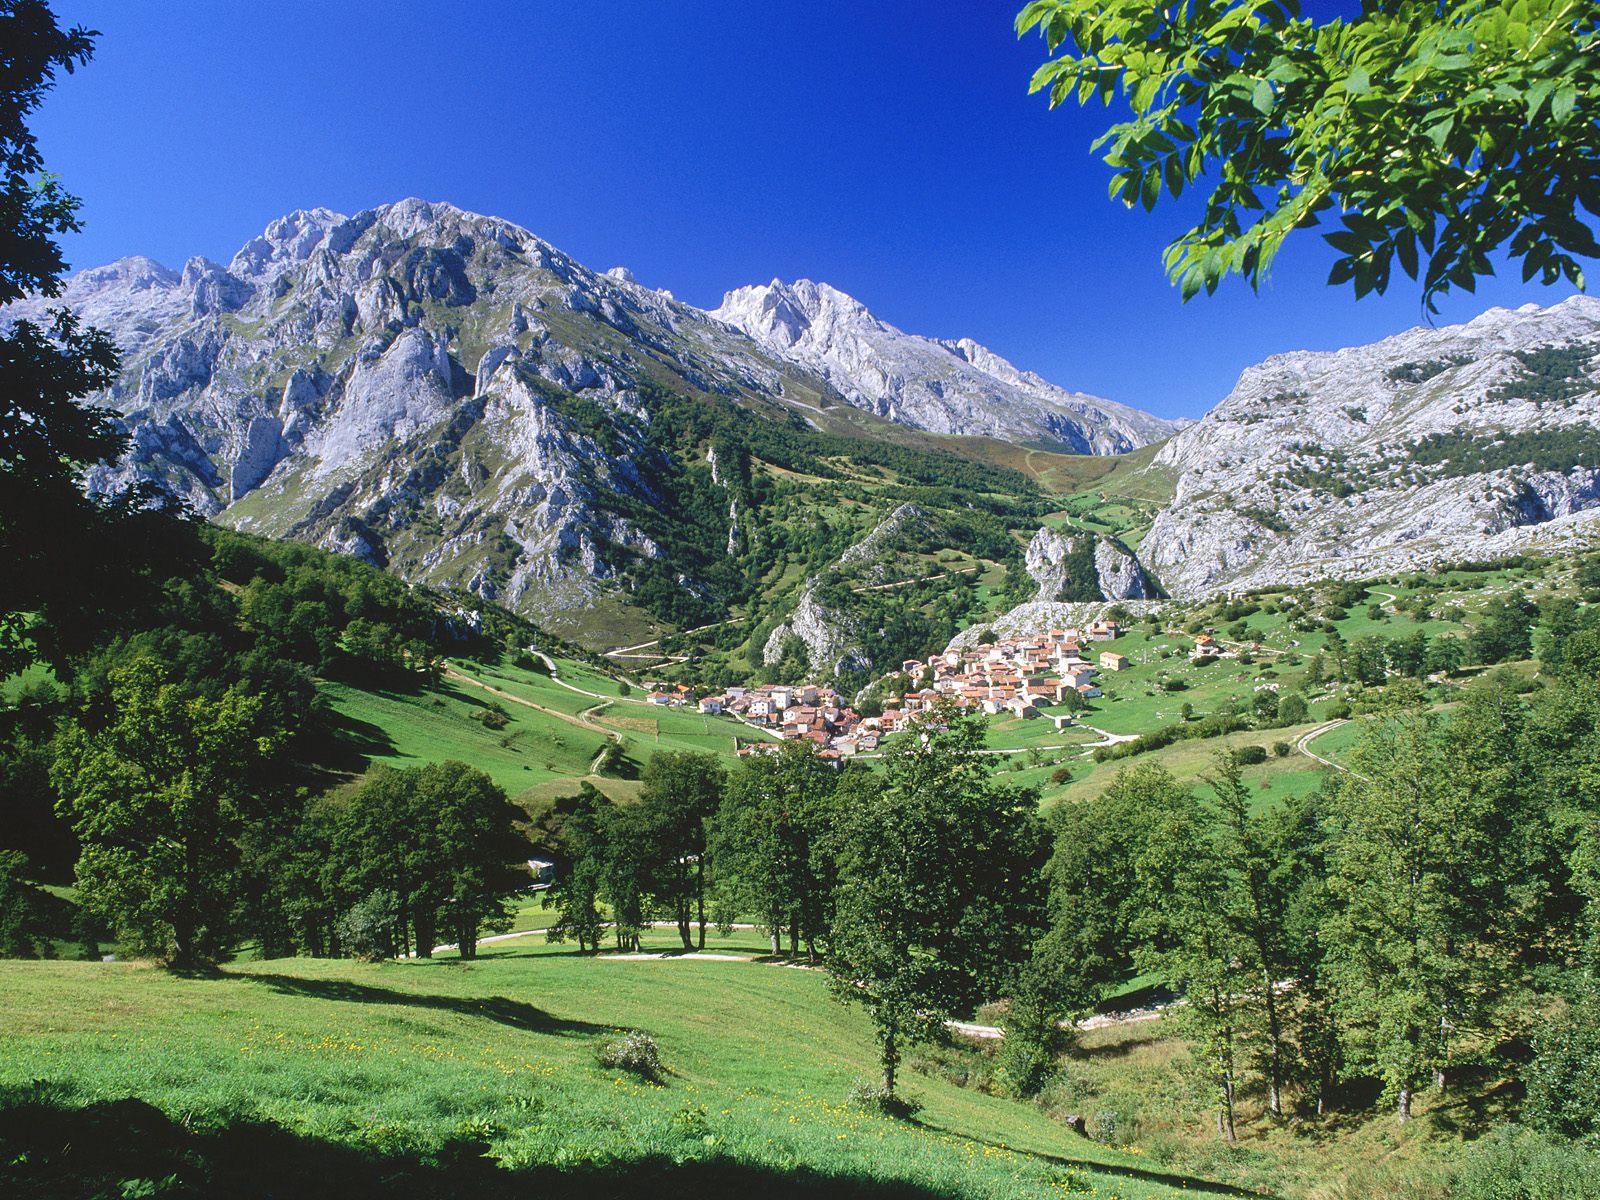 http://www.citypictures.org/data/media/228/Picos_de_Europa_National_Park_Asturias_Spain.jpg